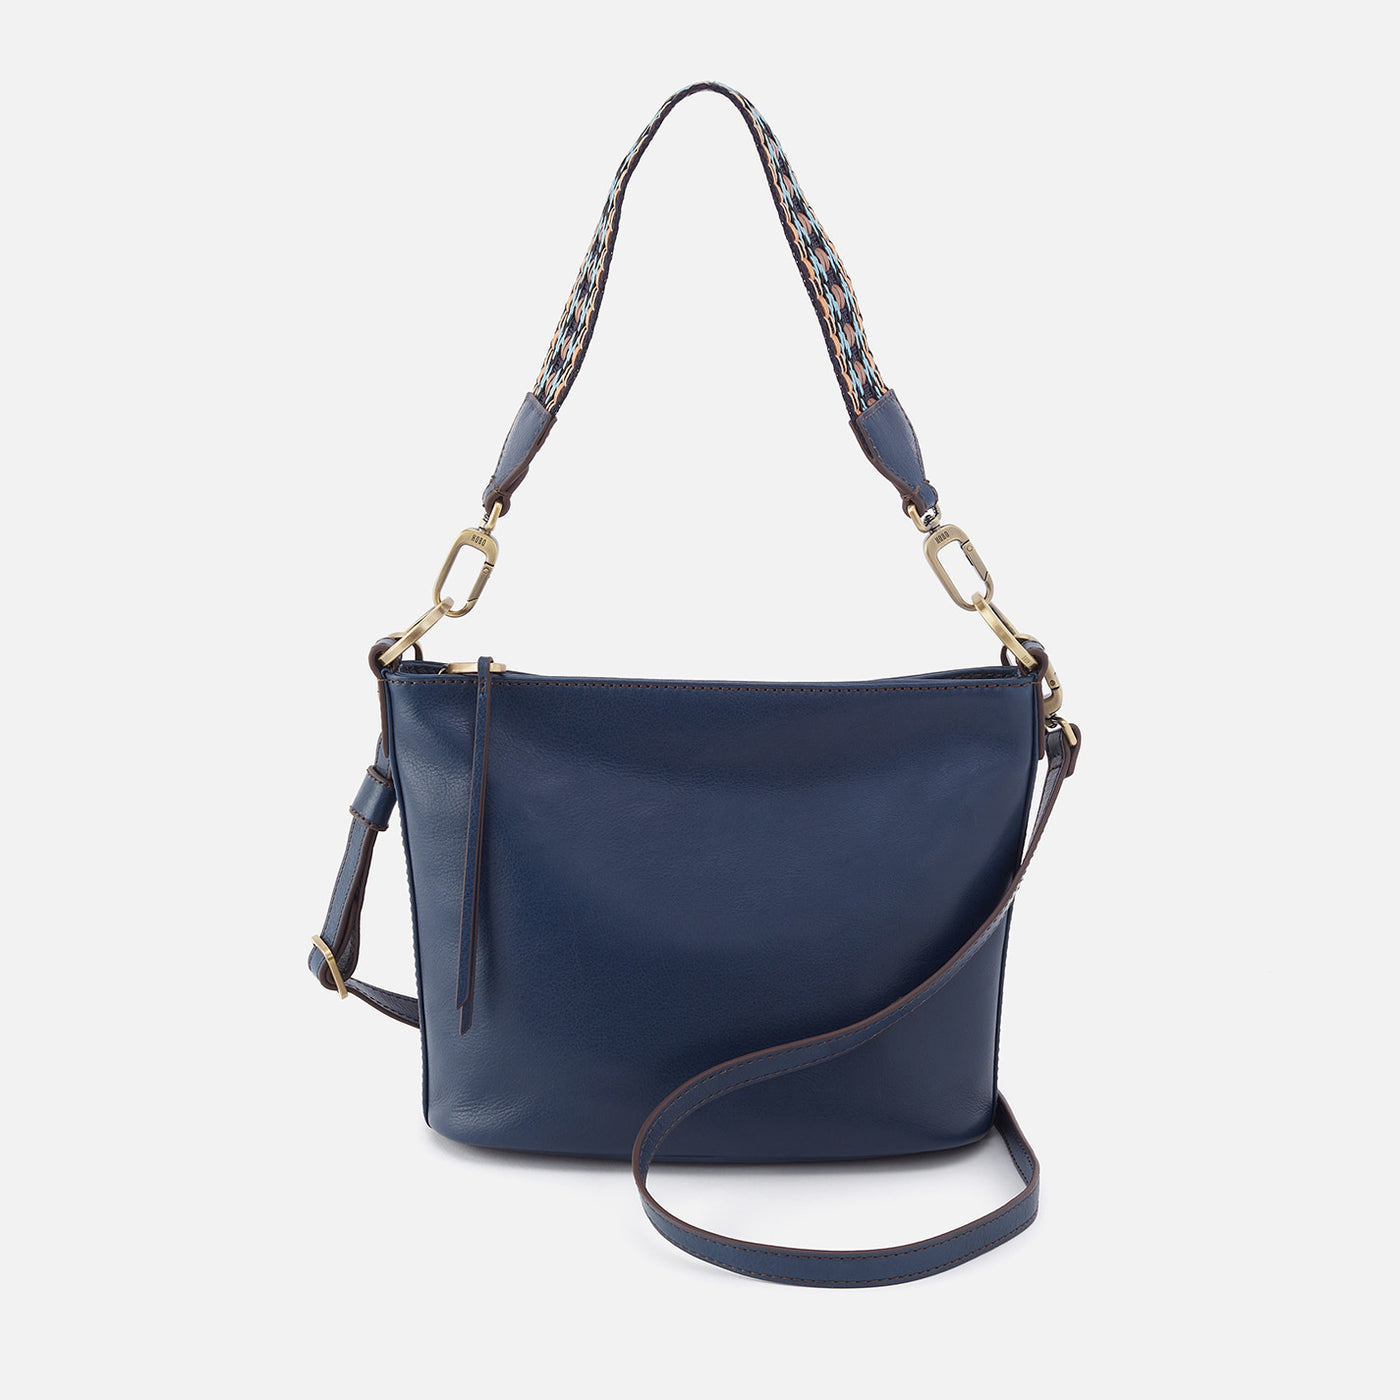 Belle Convertible Shoulder Bag in Artisan Leather - Navy